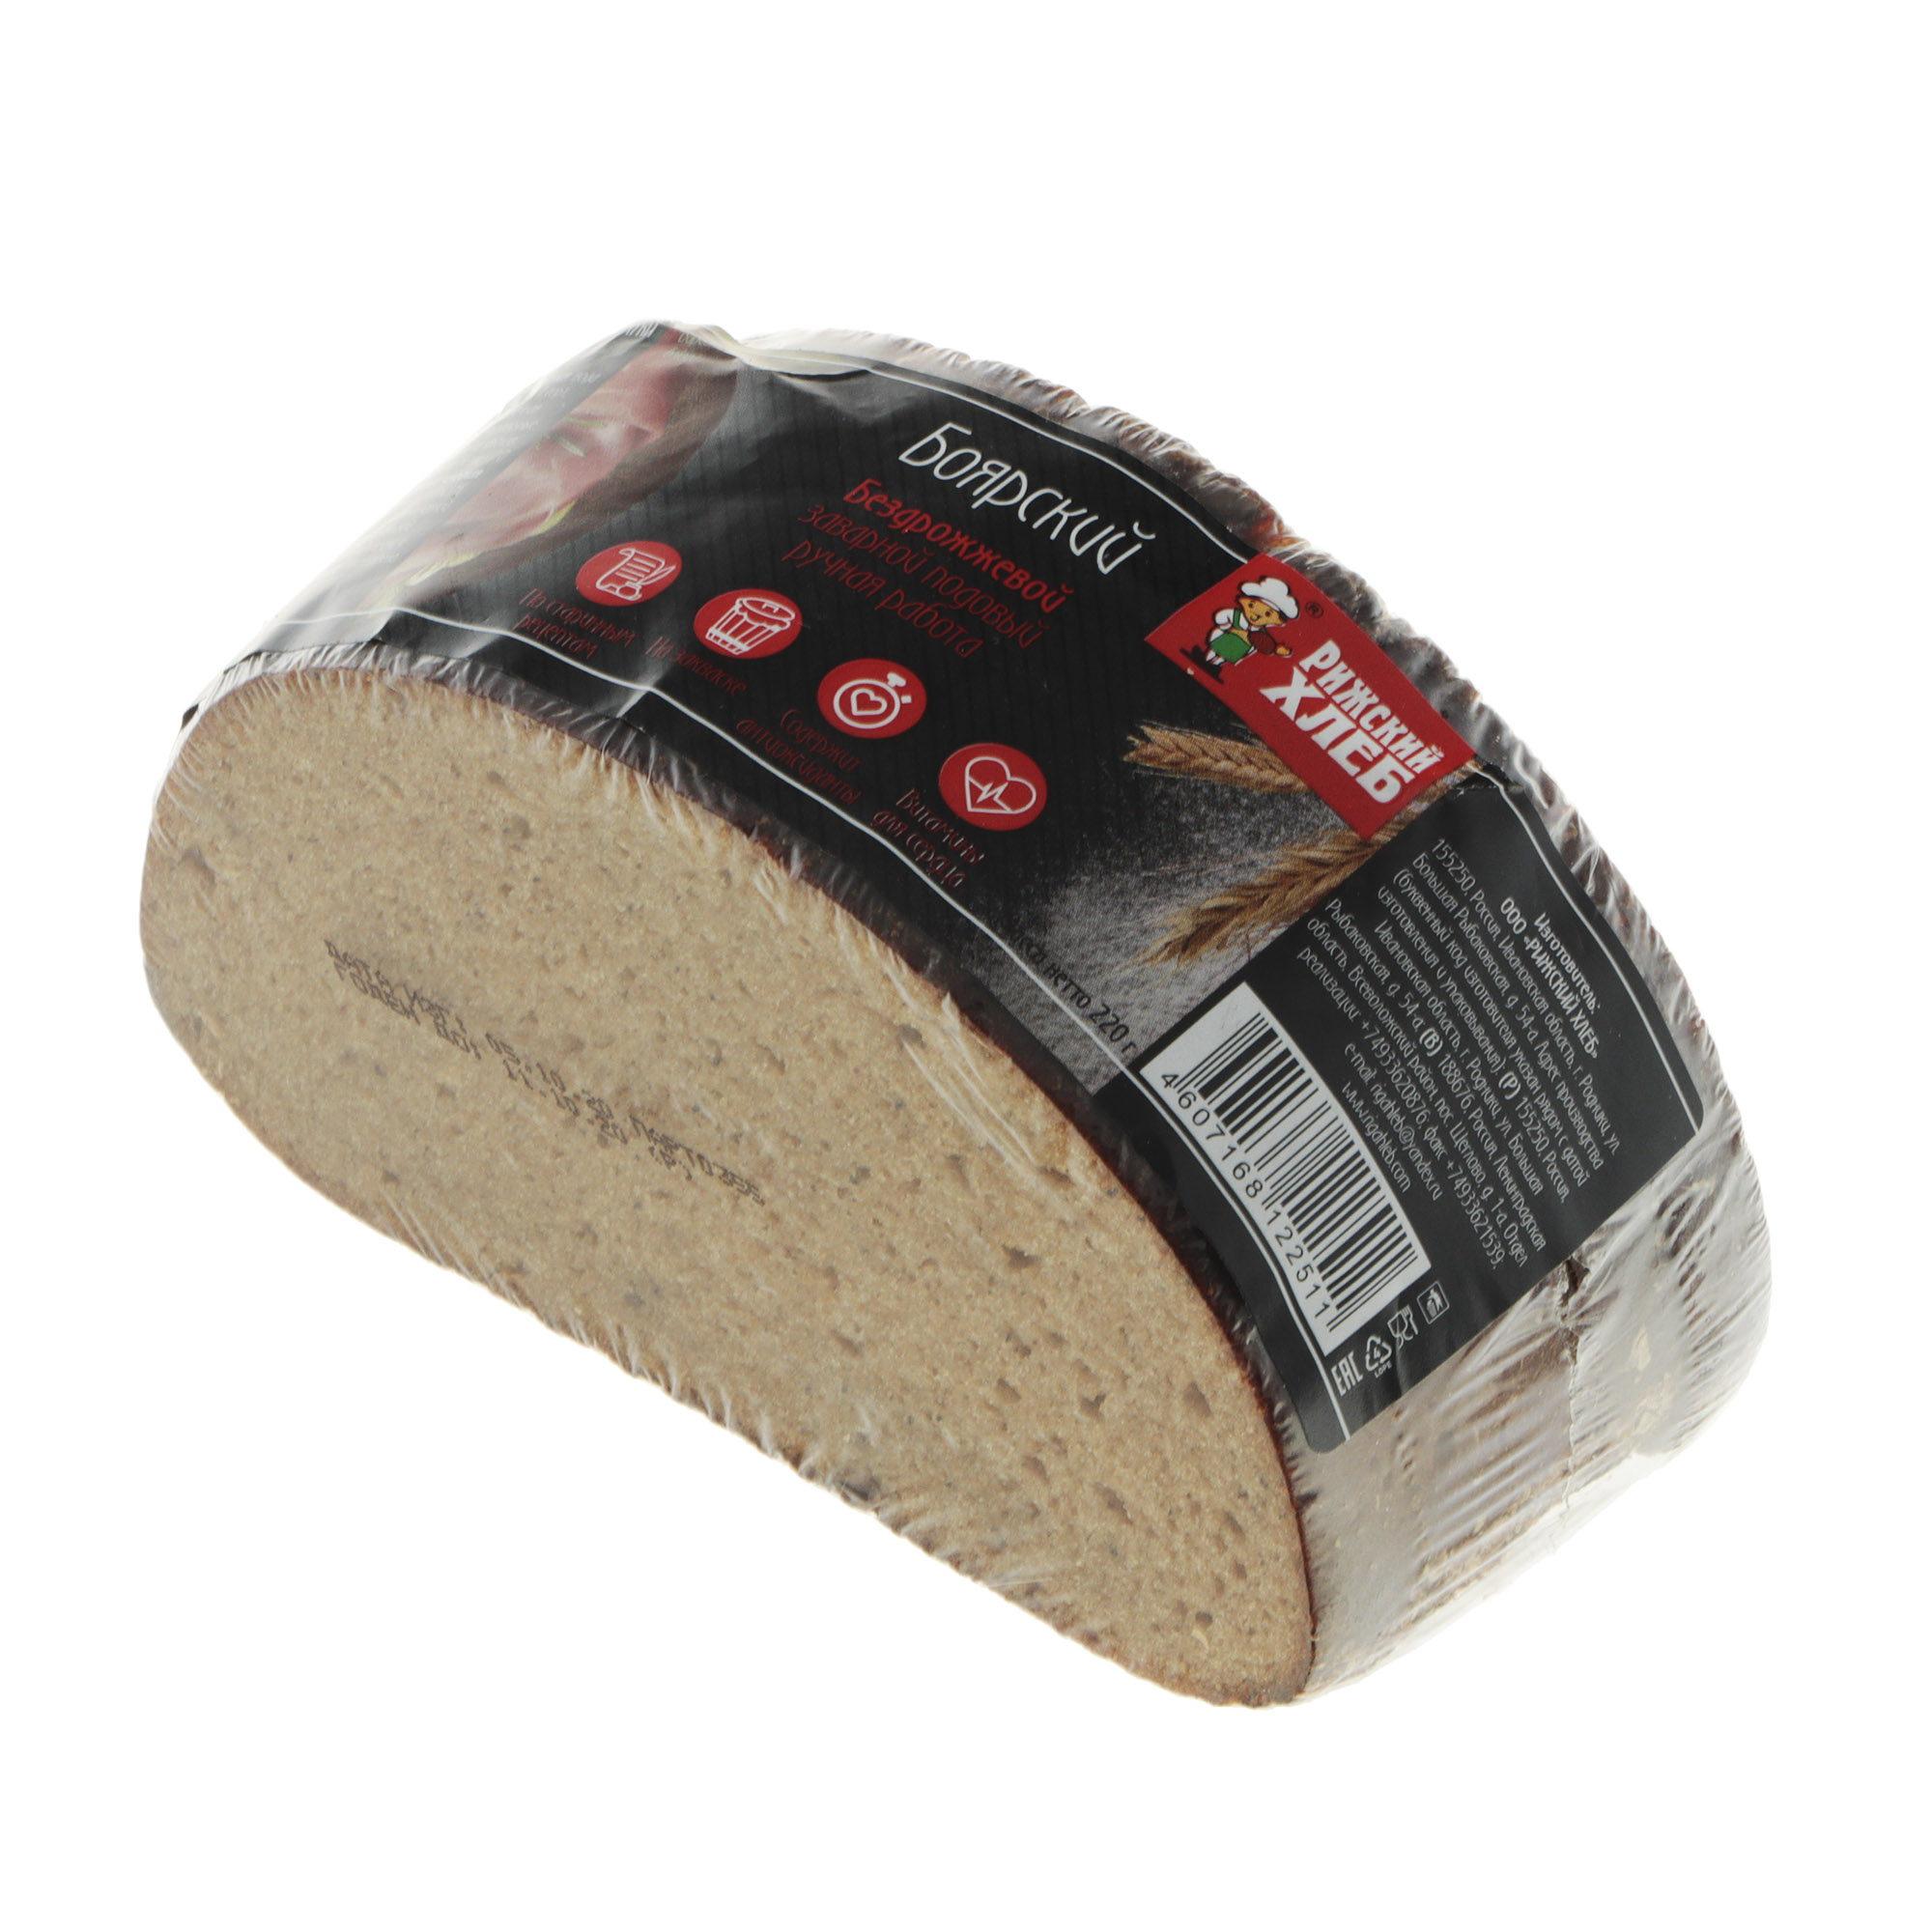 Хлеб Рижский хлеб боярский 220 г хлеб рижский хлеб дворянский 220 г